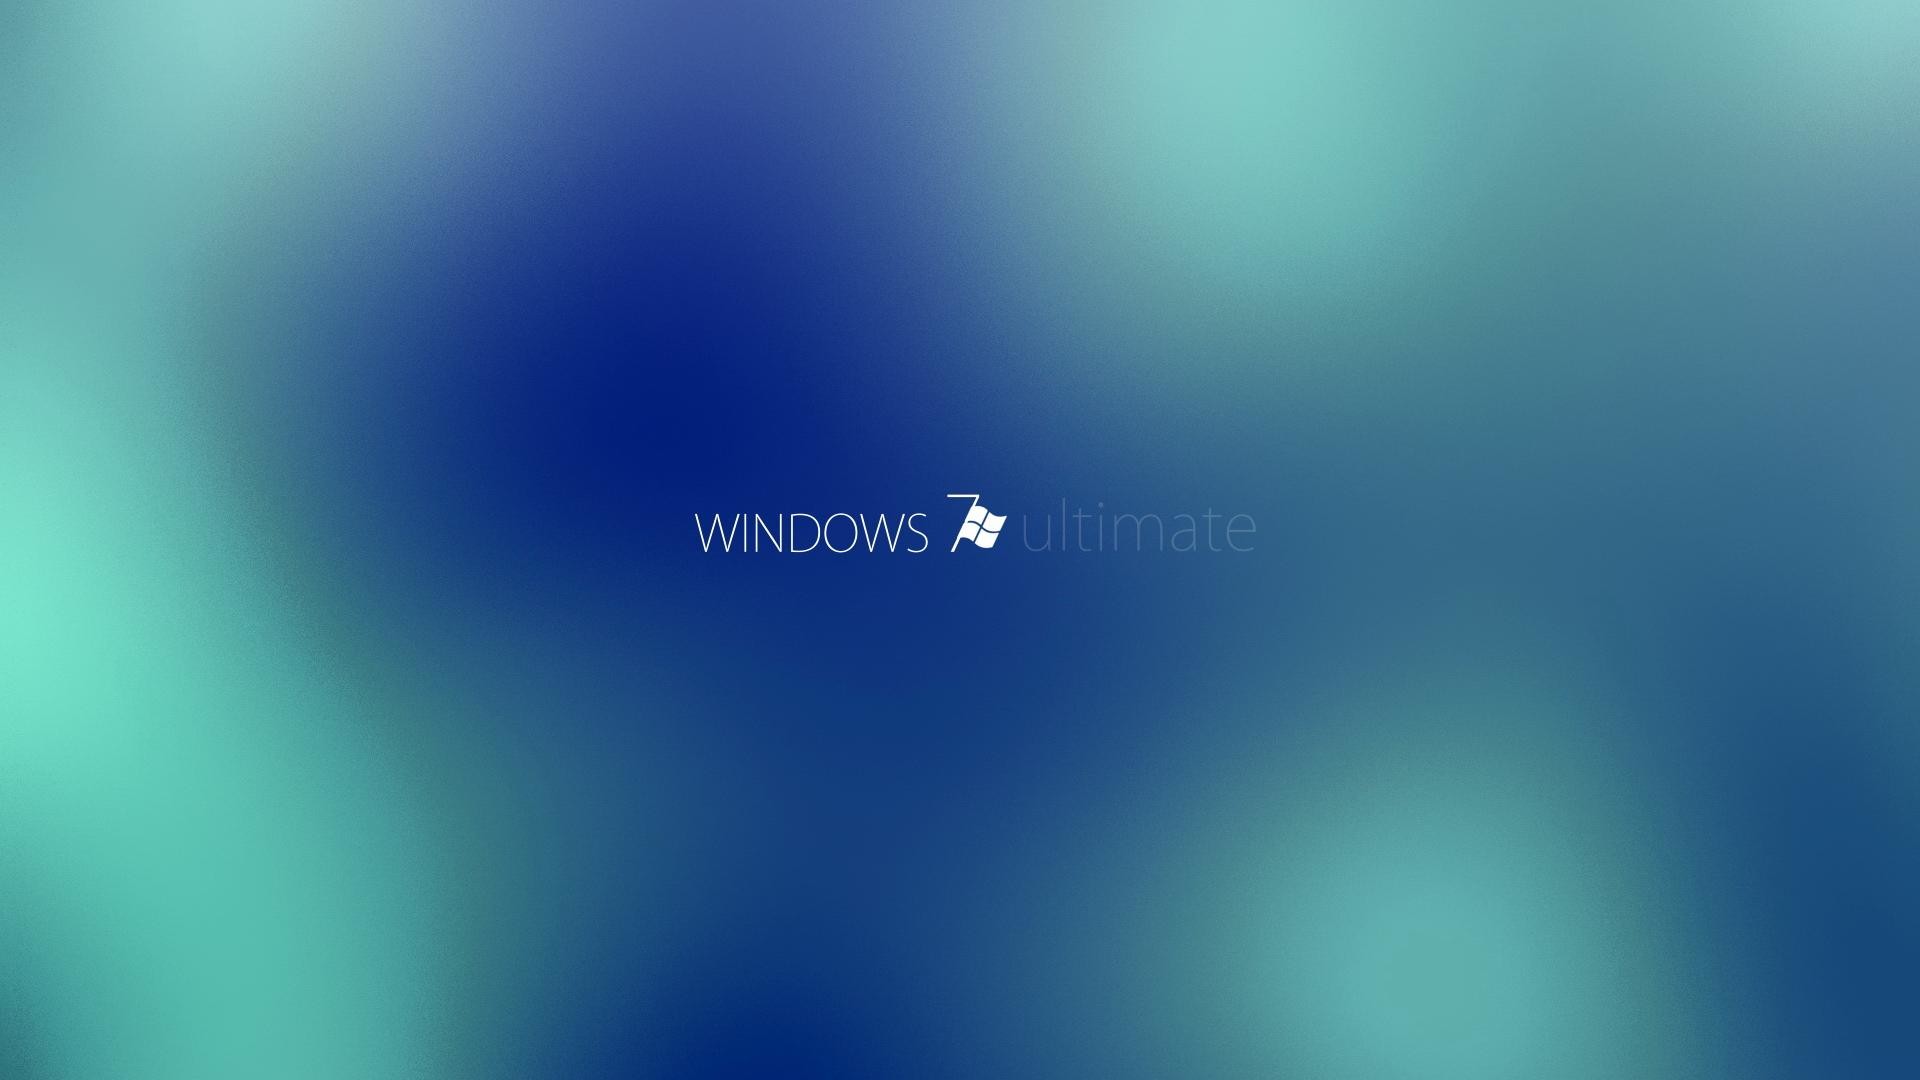 1920x1080  Cute Windows 7 ultimate desktop backgrounds wide wallpapers: 1280x800,1440x900,1680x1050 -